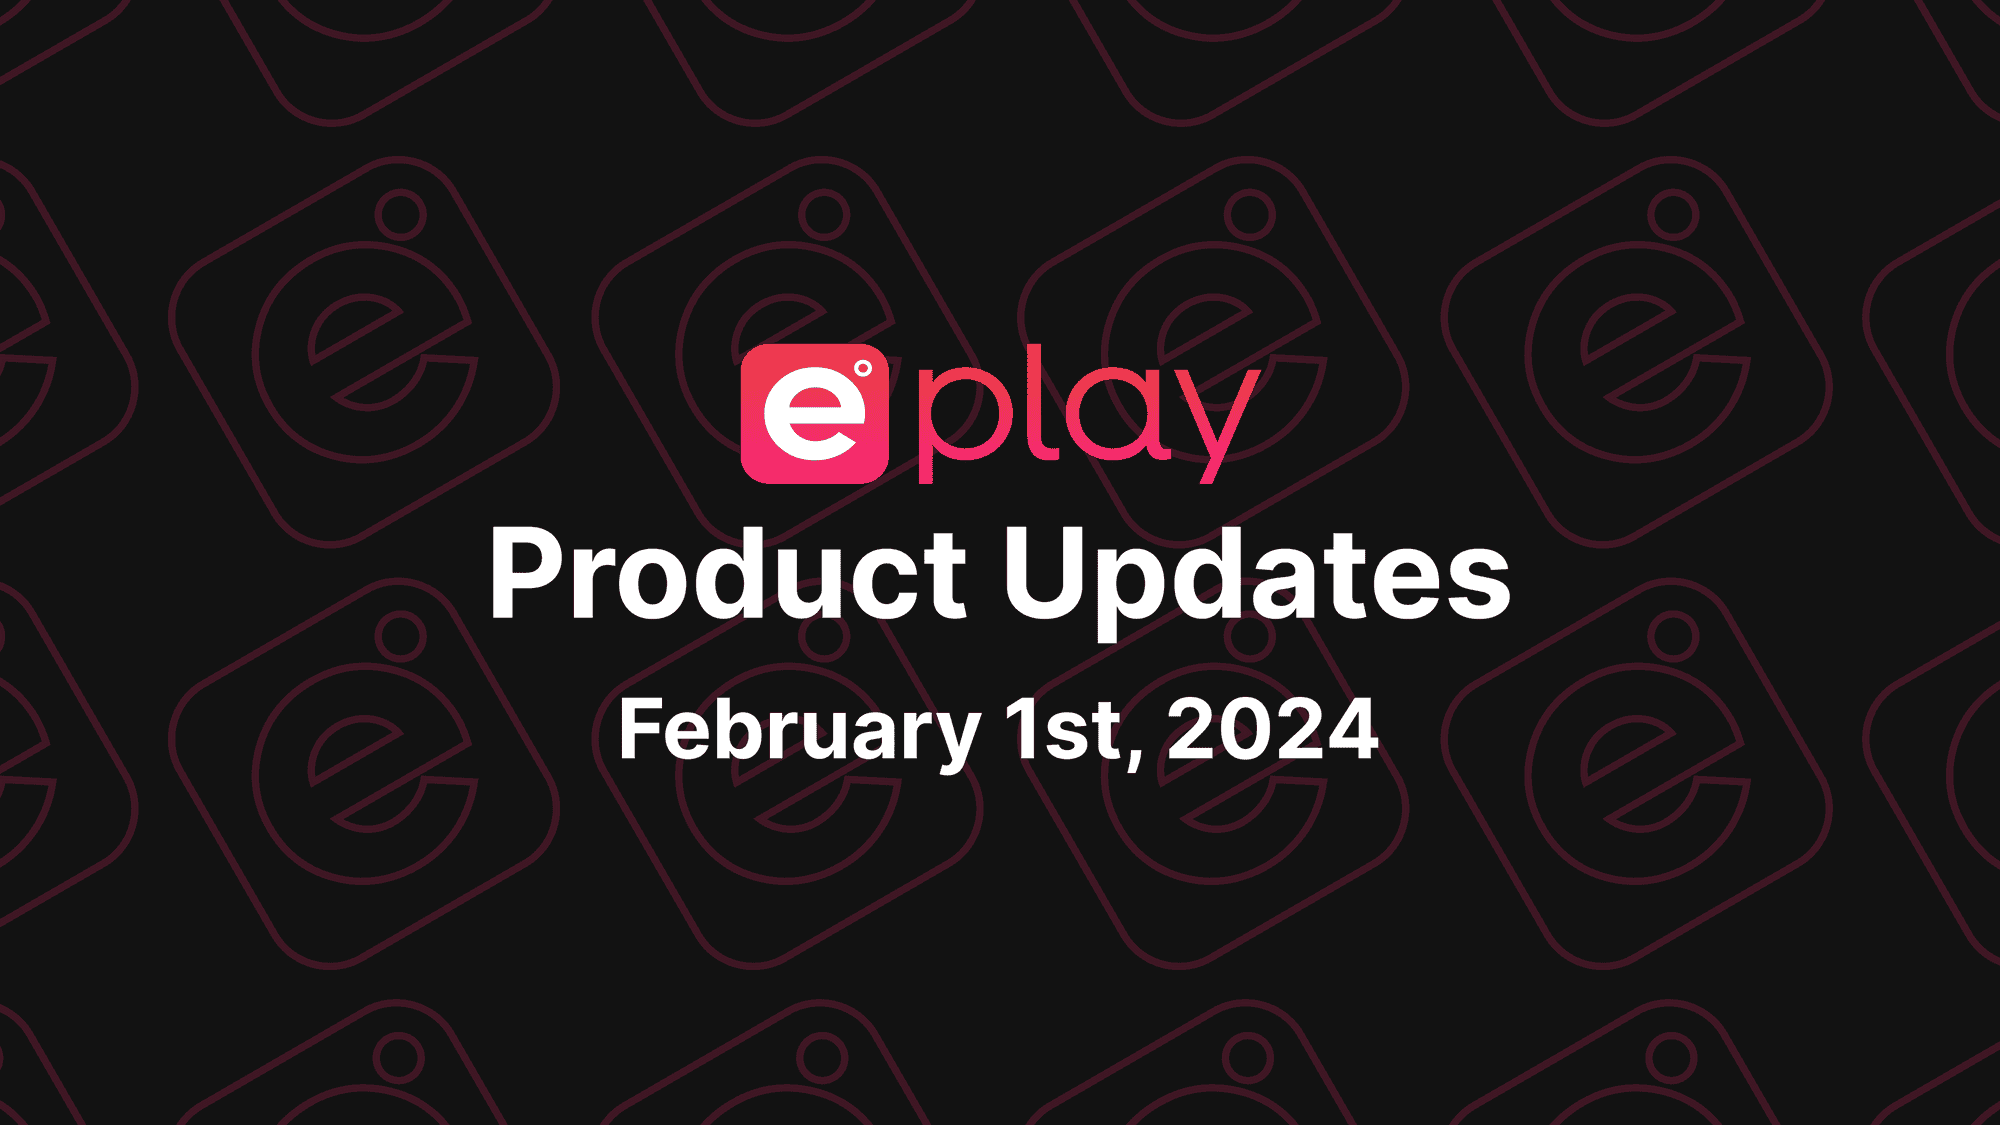 ePlay Product Updates: February 1st, 2024